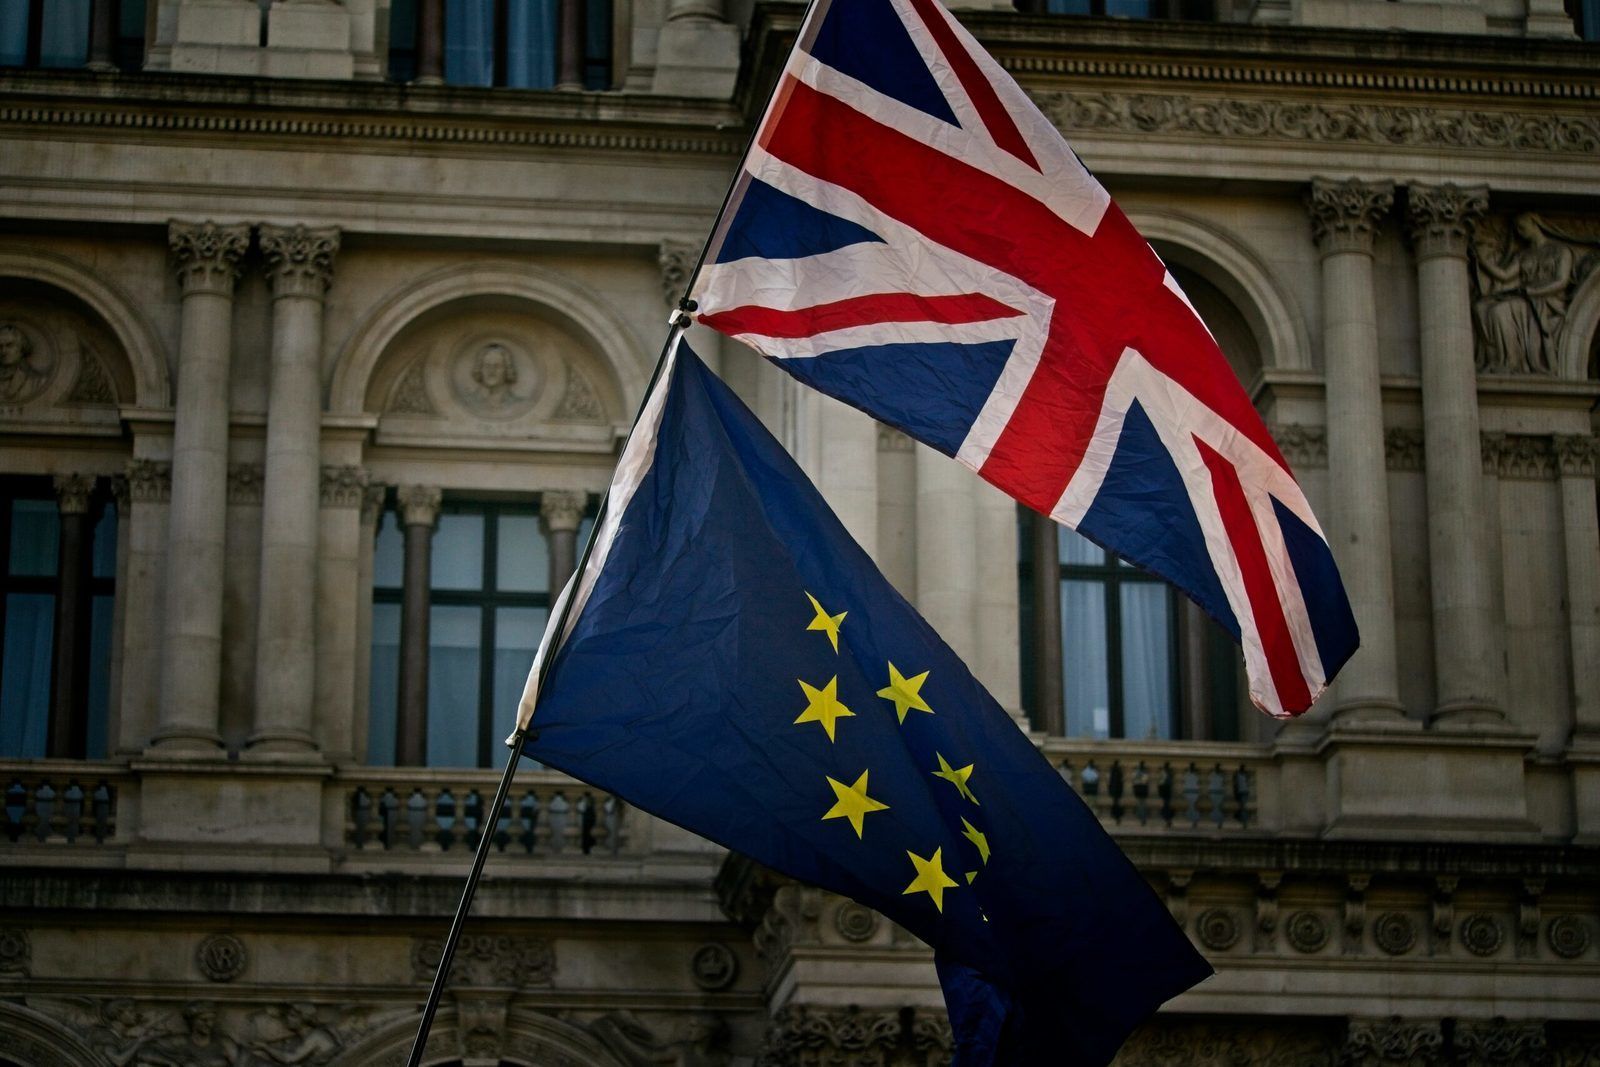 60: EU citizens rights after Brexit